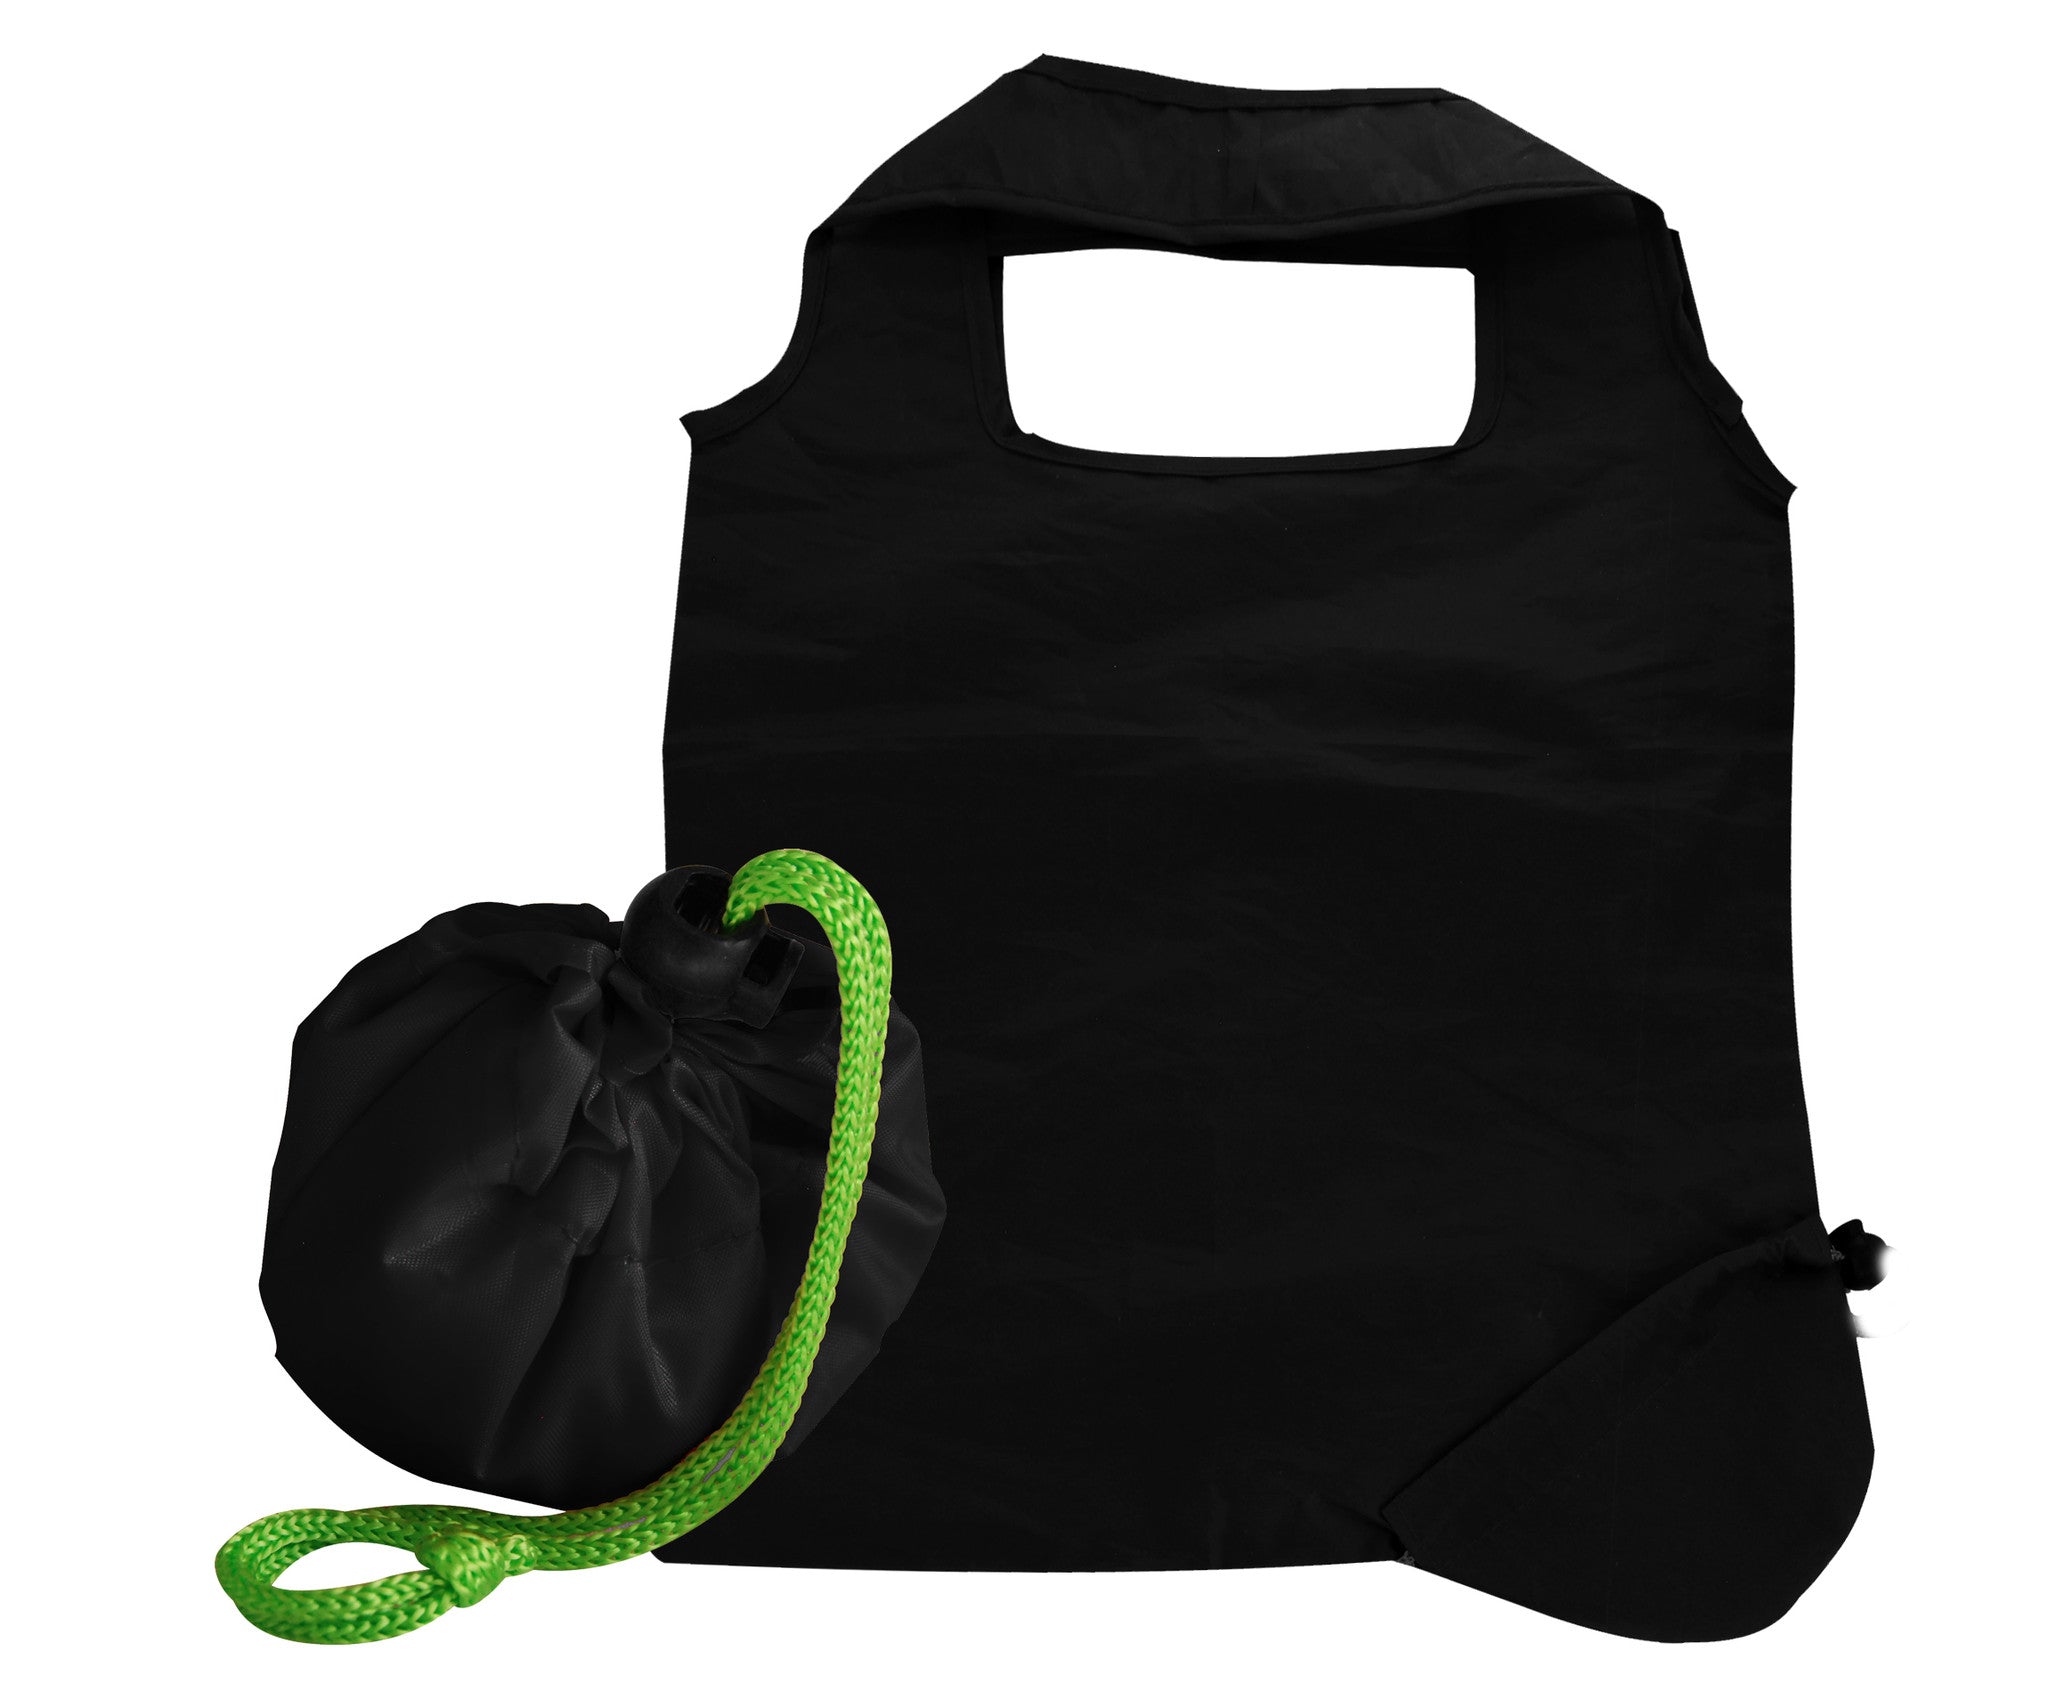 Black foldaway shopping bag